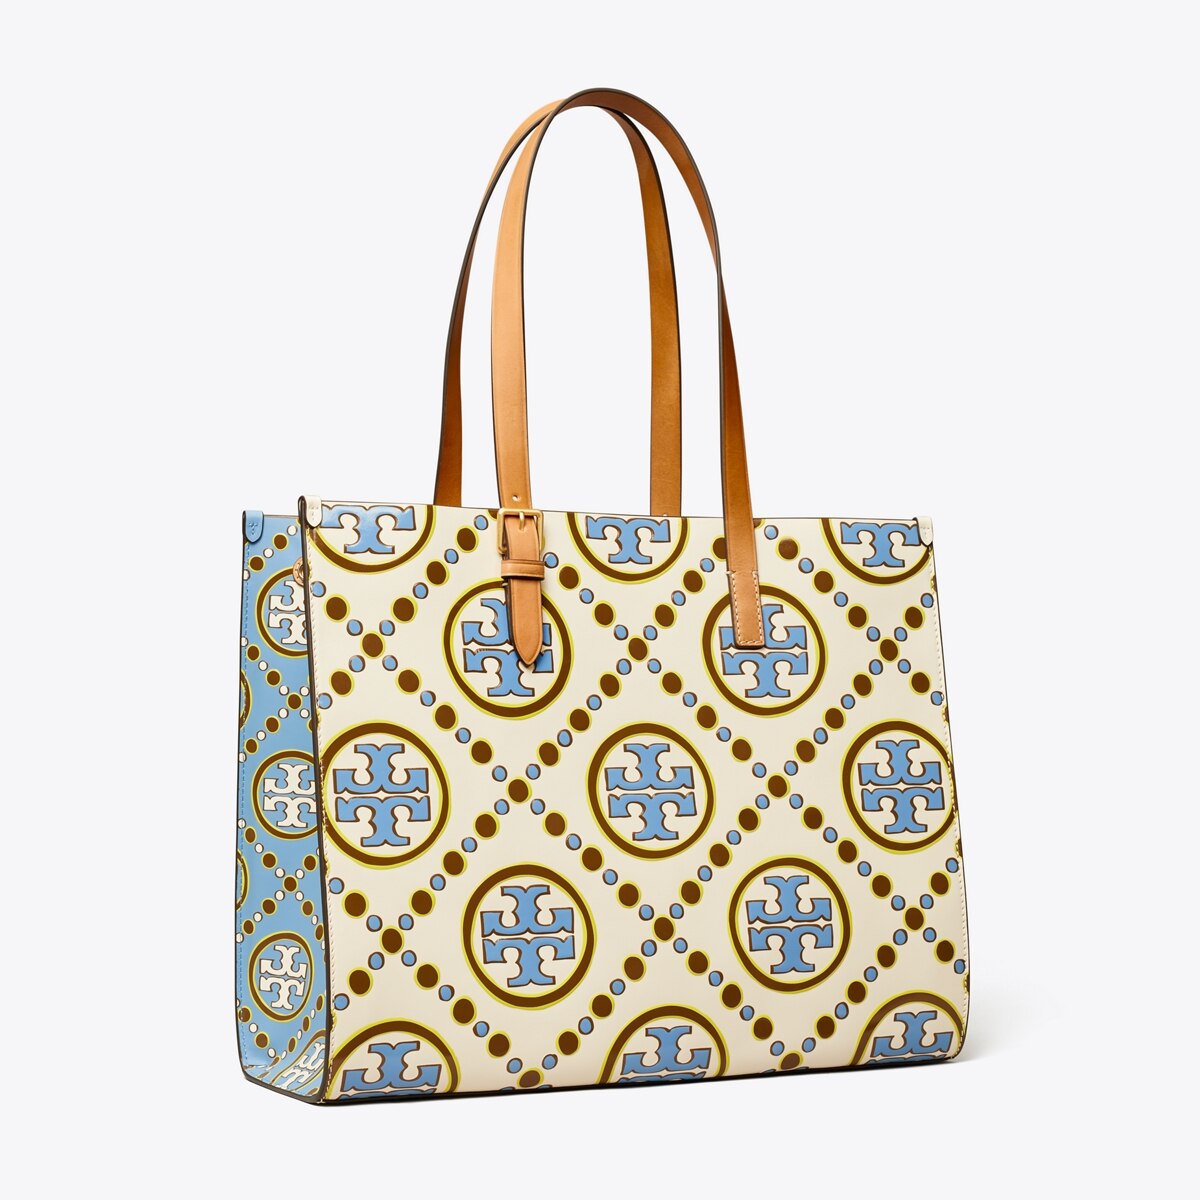 Tory Burch T Monogram Bags & Handbags - Women